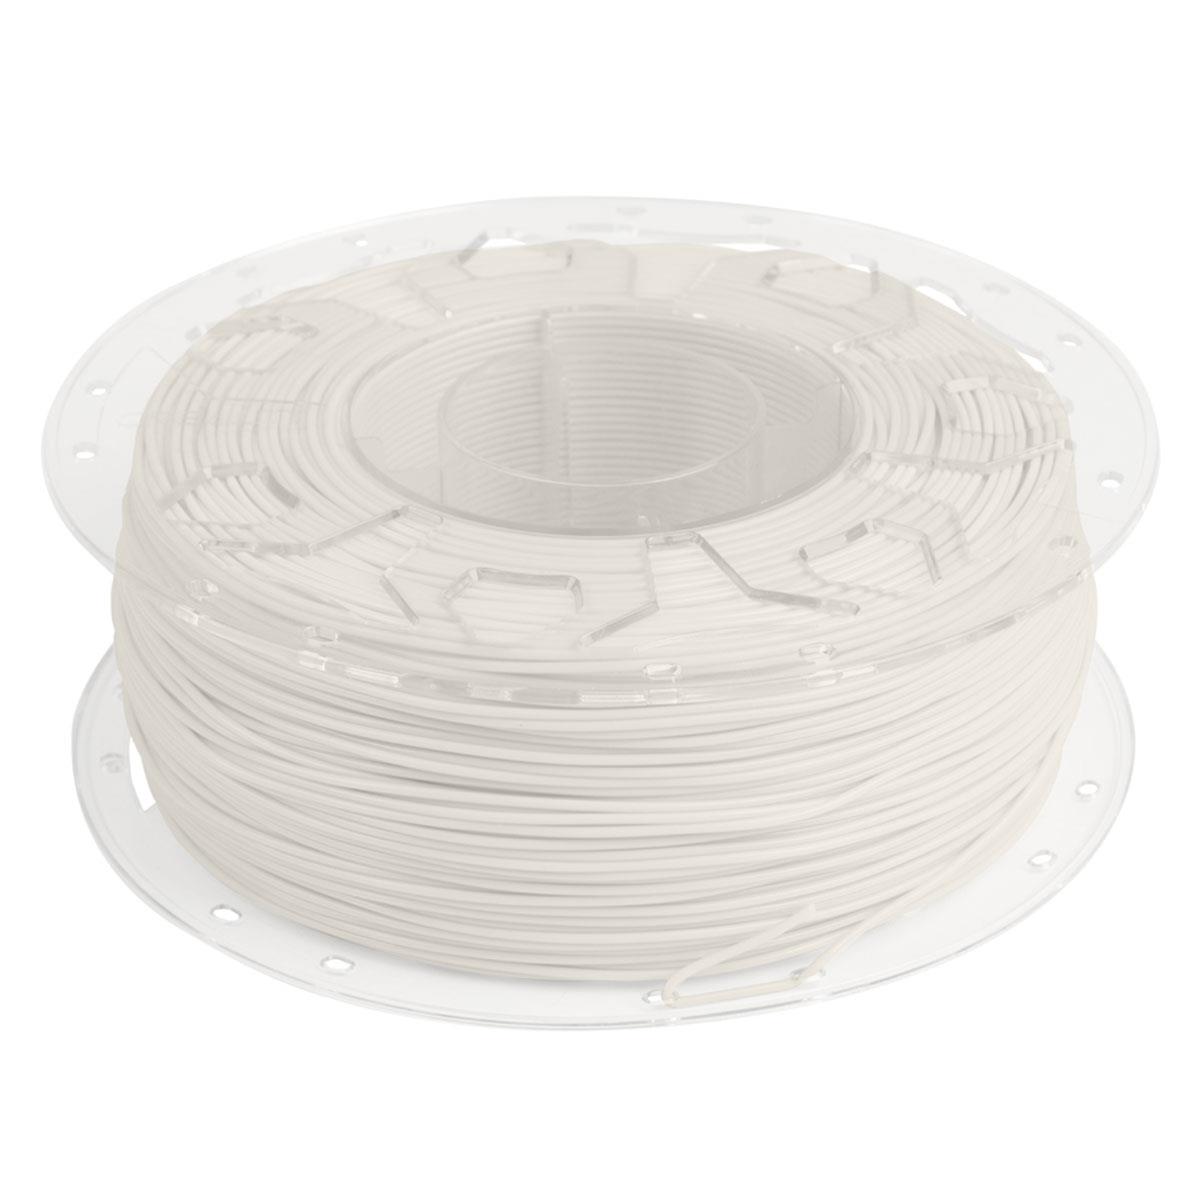 

Creality 1.75mm PLA Filament for 3D Printer, White